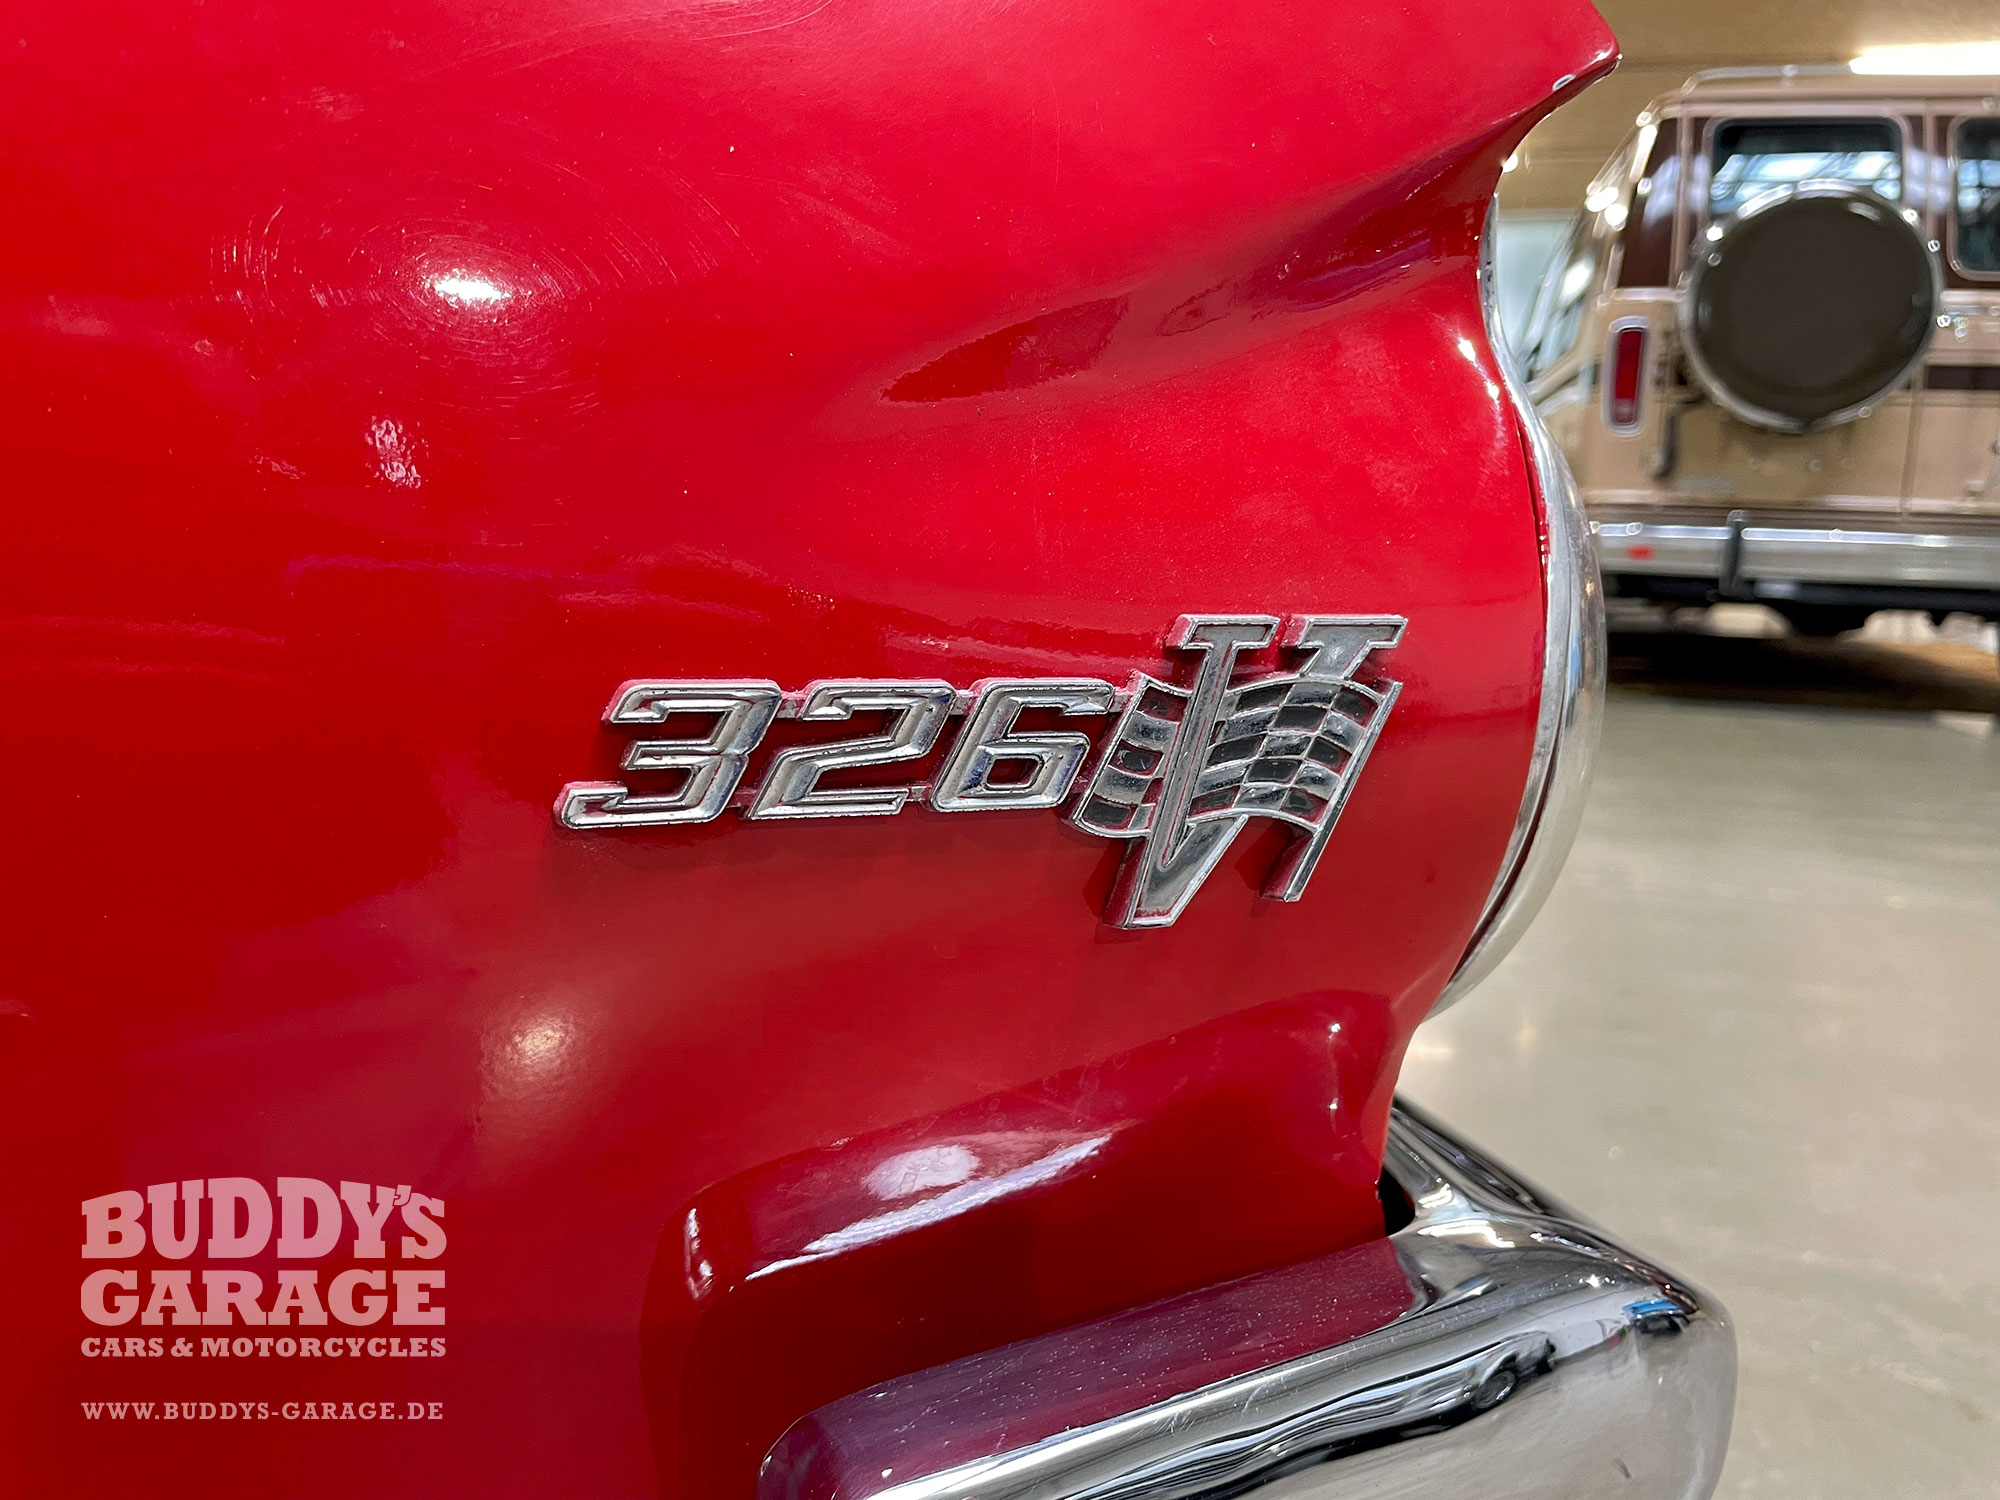 Pontiac Tempest Custom Convertible 1964 | Buddy's Garage Bad Oeynhausen